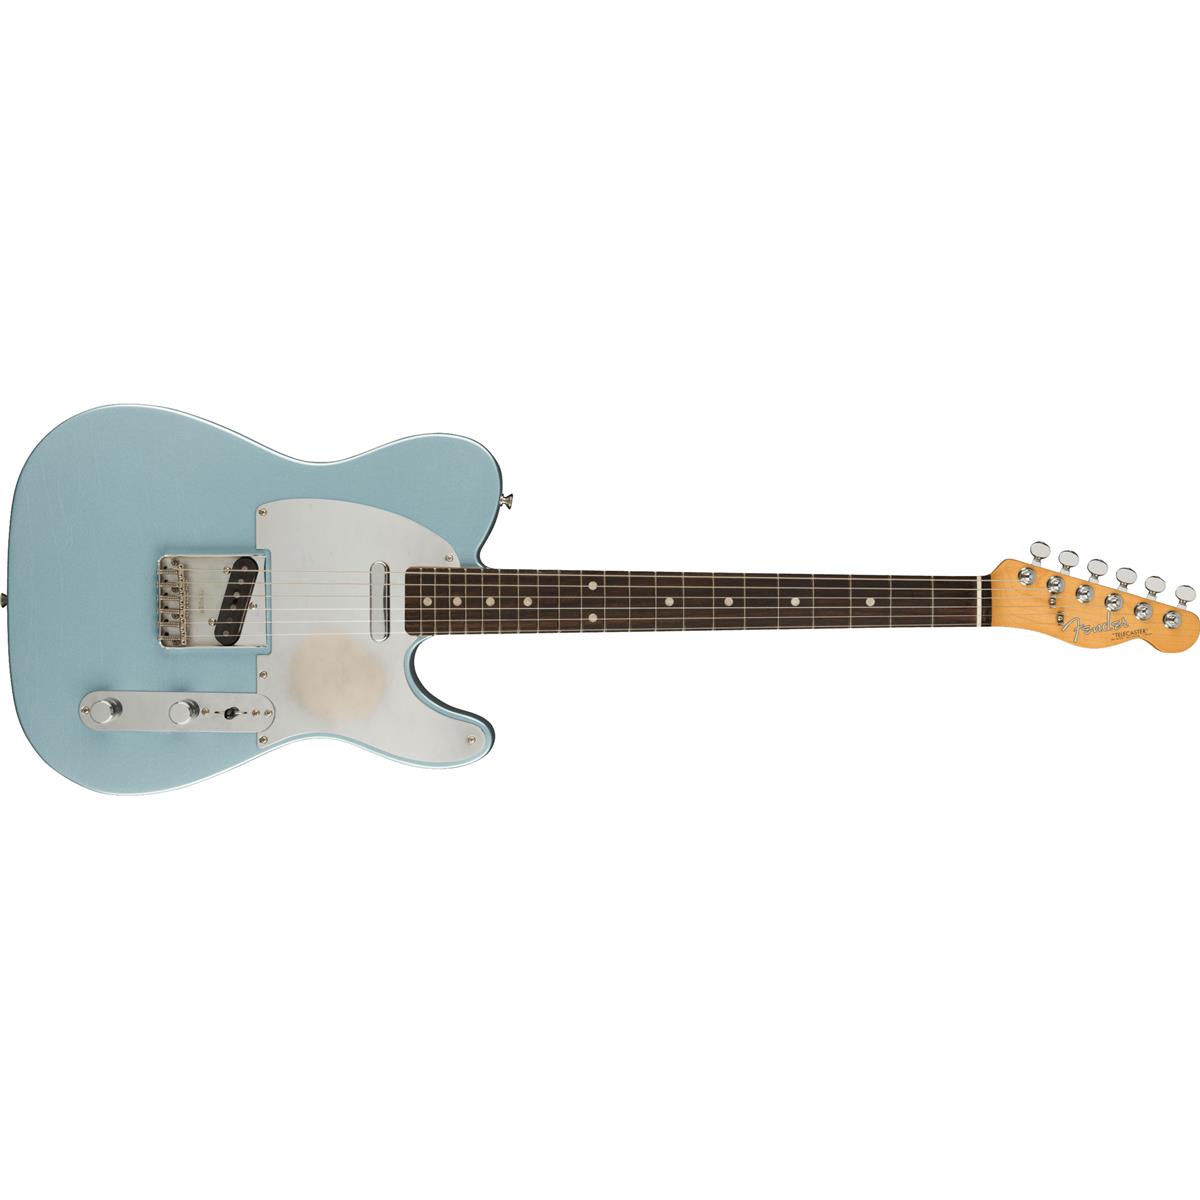 Fender Chrissie Hynde Telecaster Electric Guitar $929 + free s/h